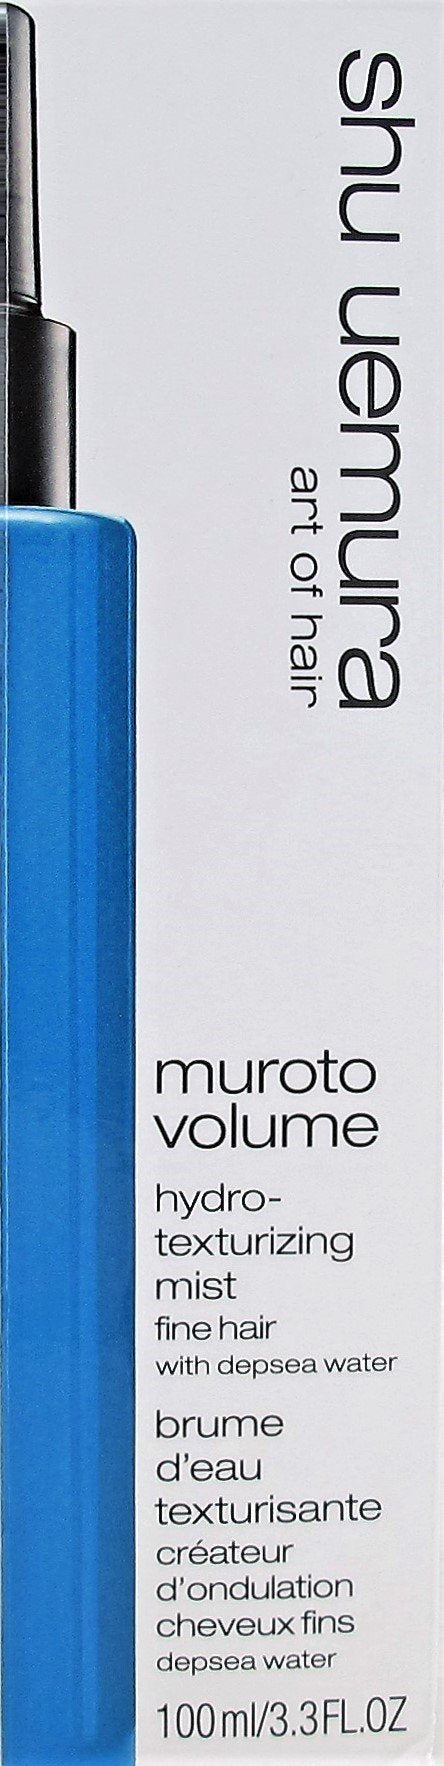 Shu Uemura Muroto Volume Hydro-Texturizing Mist 3.3 oz